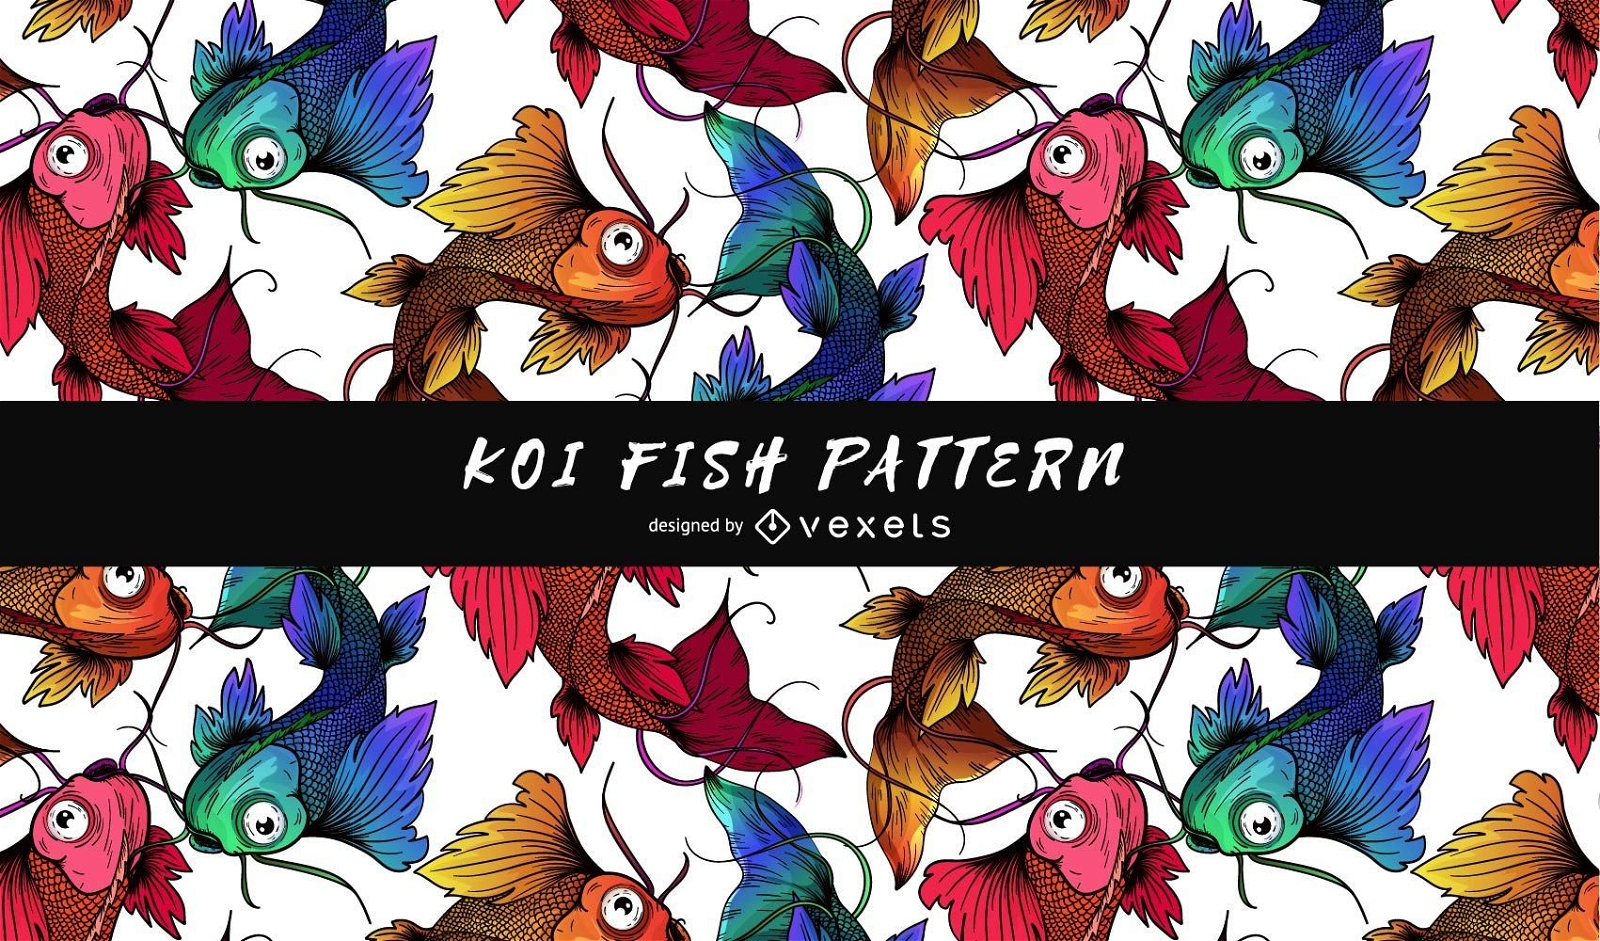 Koi fish pattern